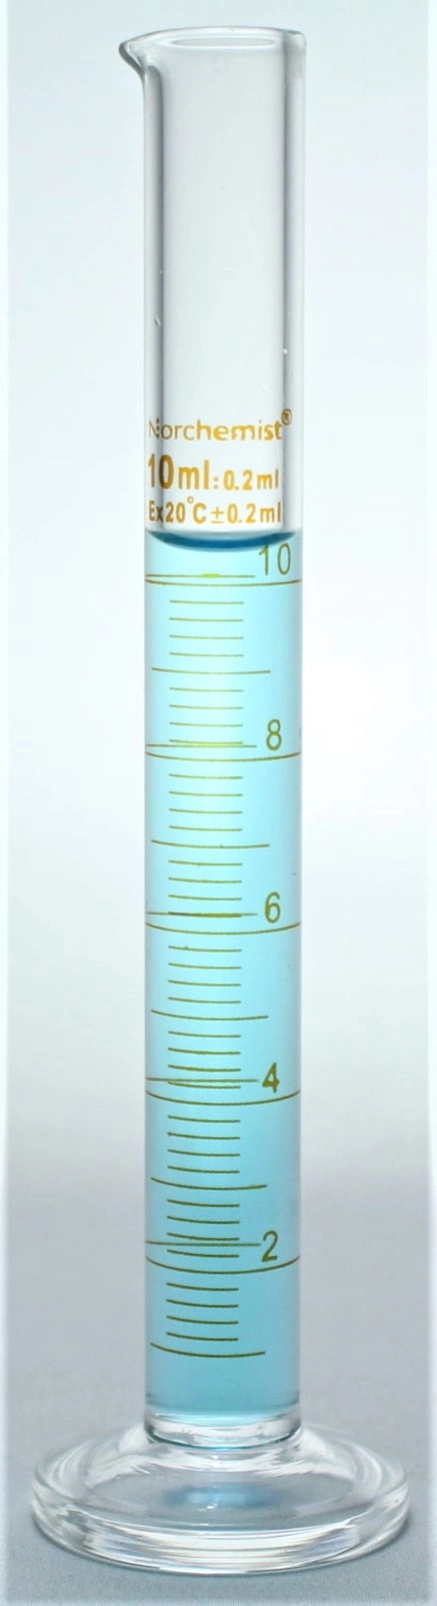 Norchemist GP-GC-0026 Graduated Cylinder (10mL)